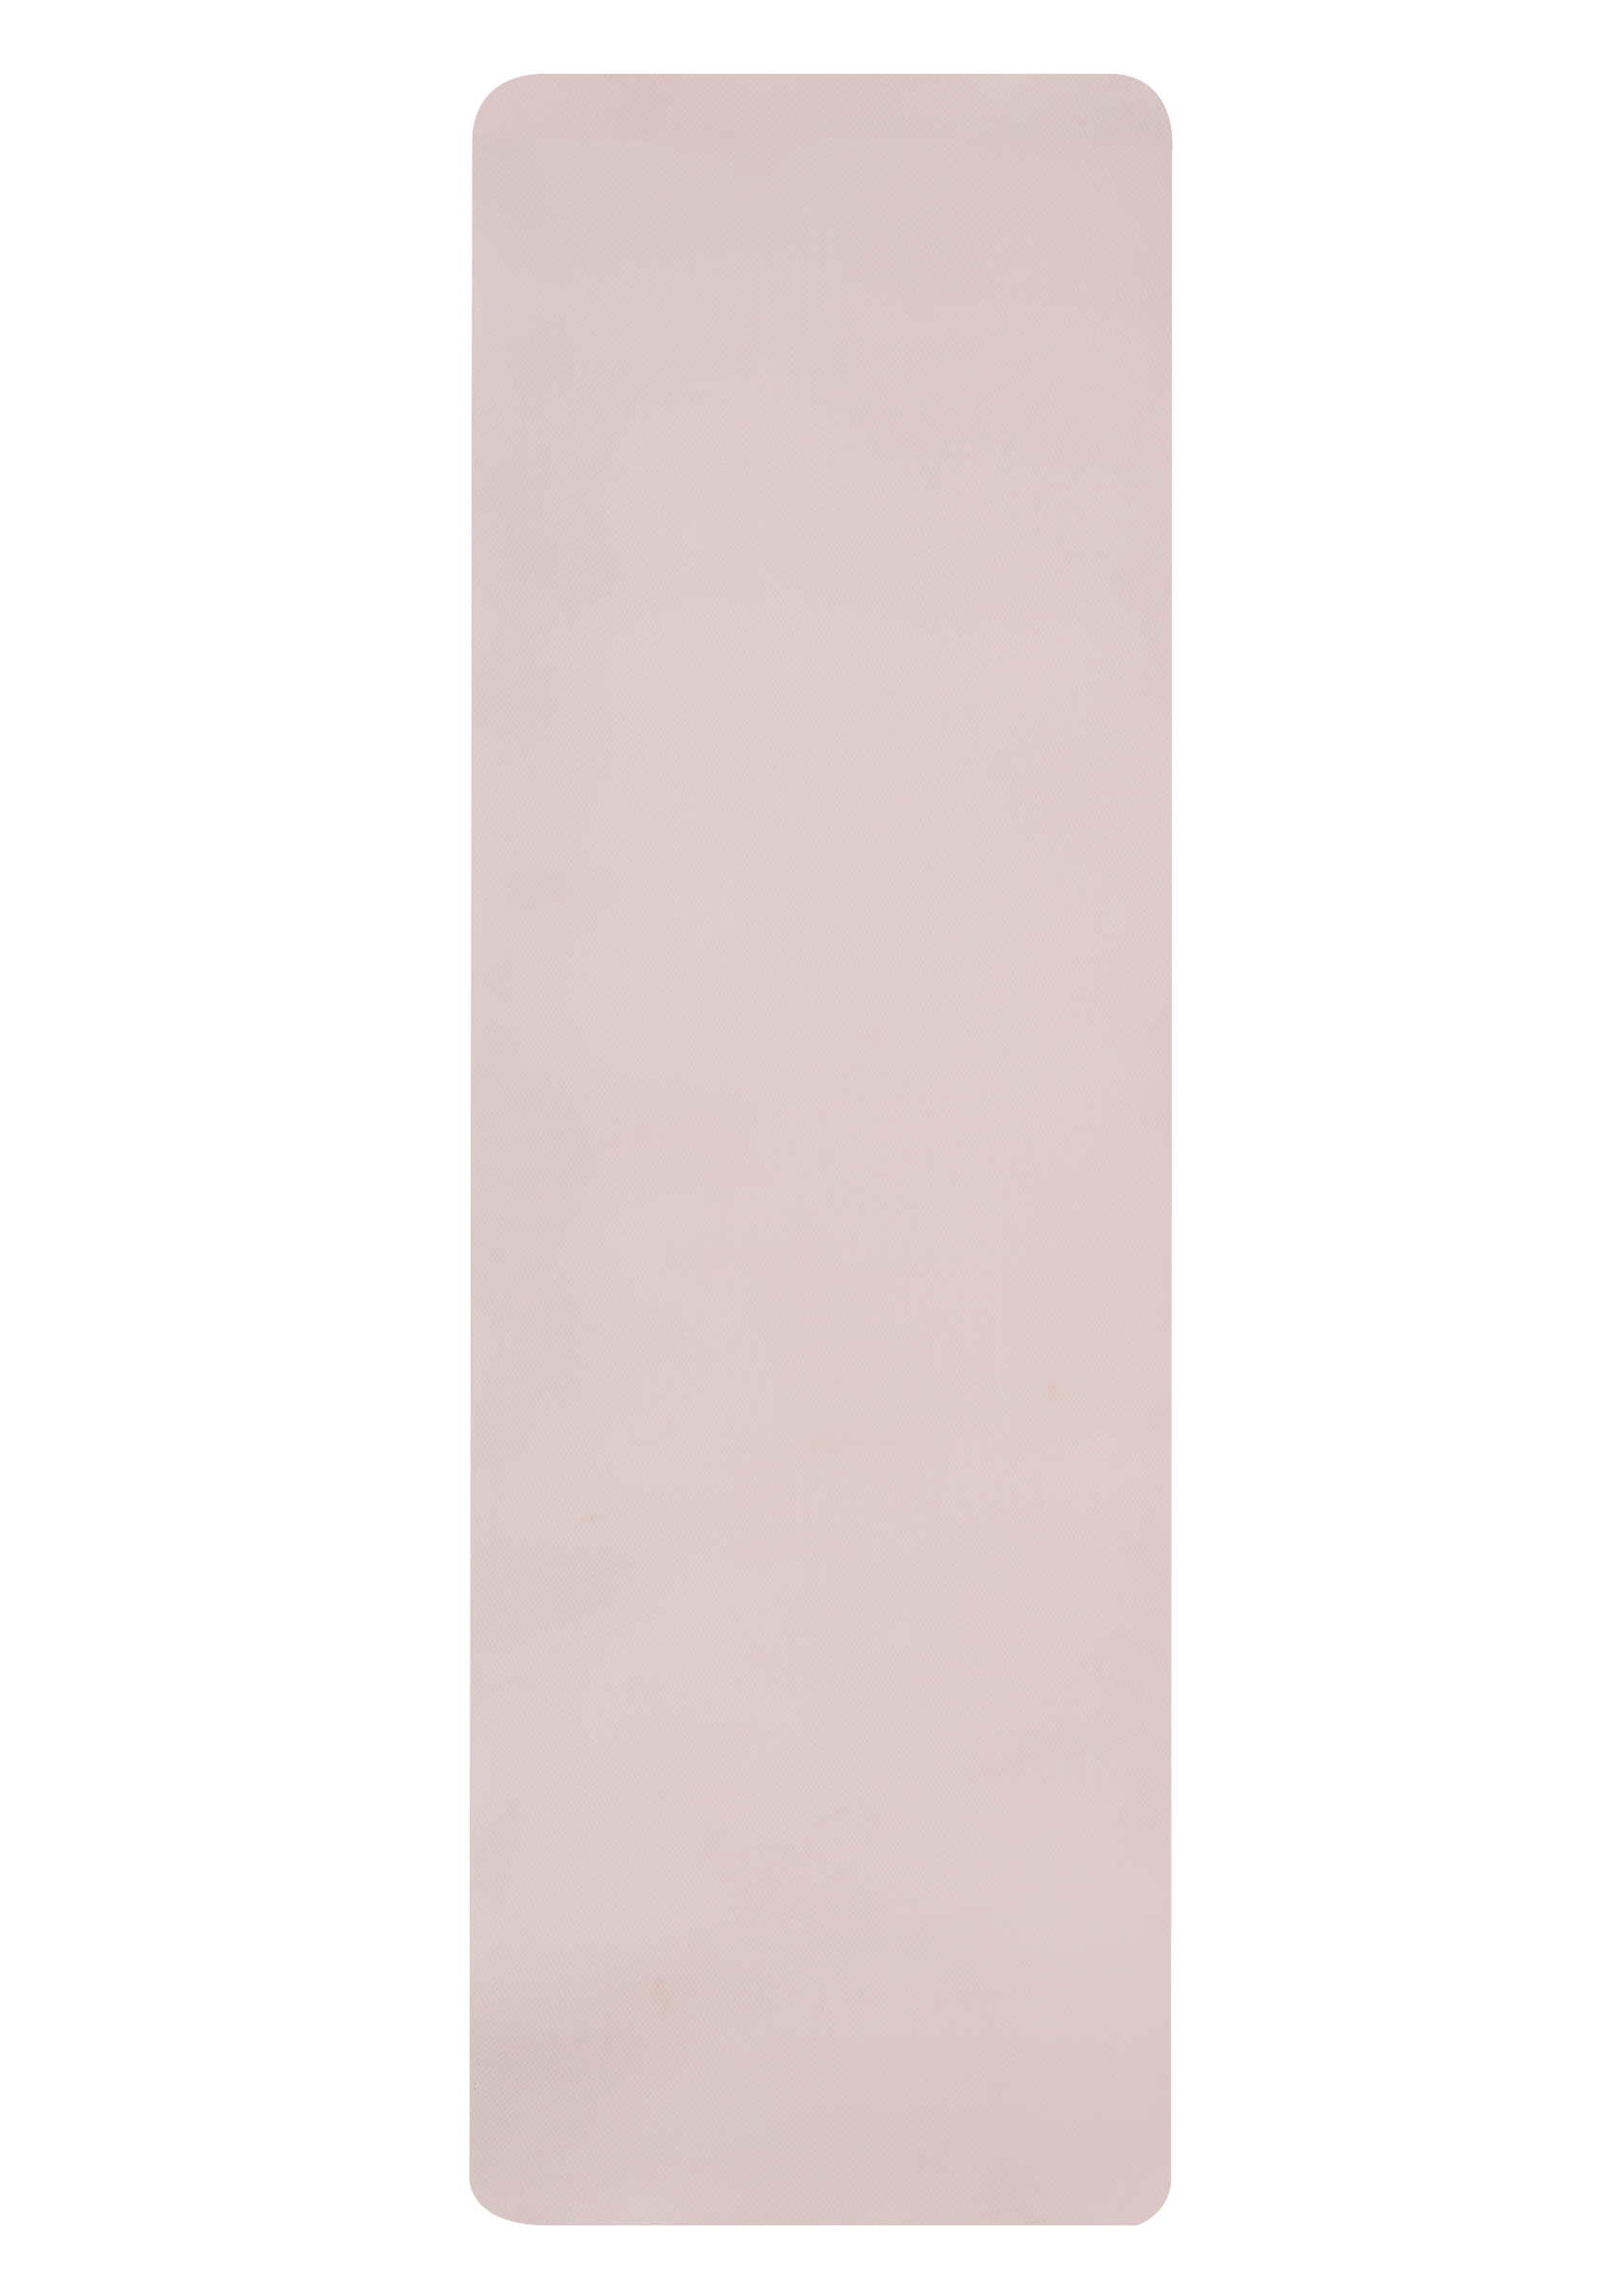 Yoga Mat Essential Balance 4mm - Devine Pink